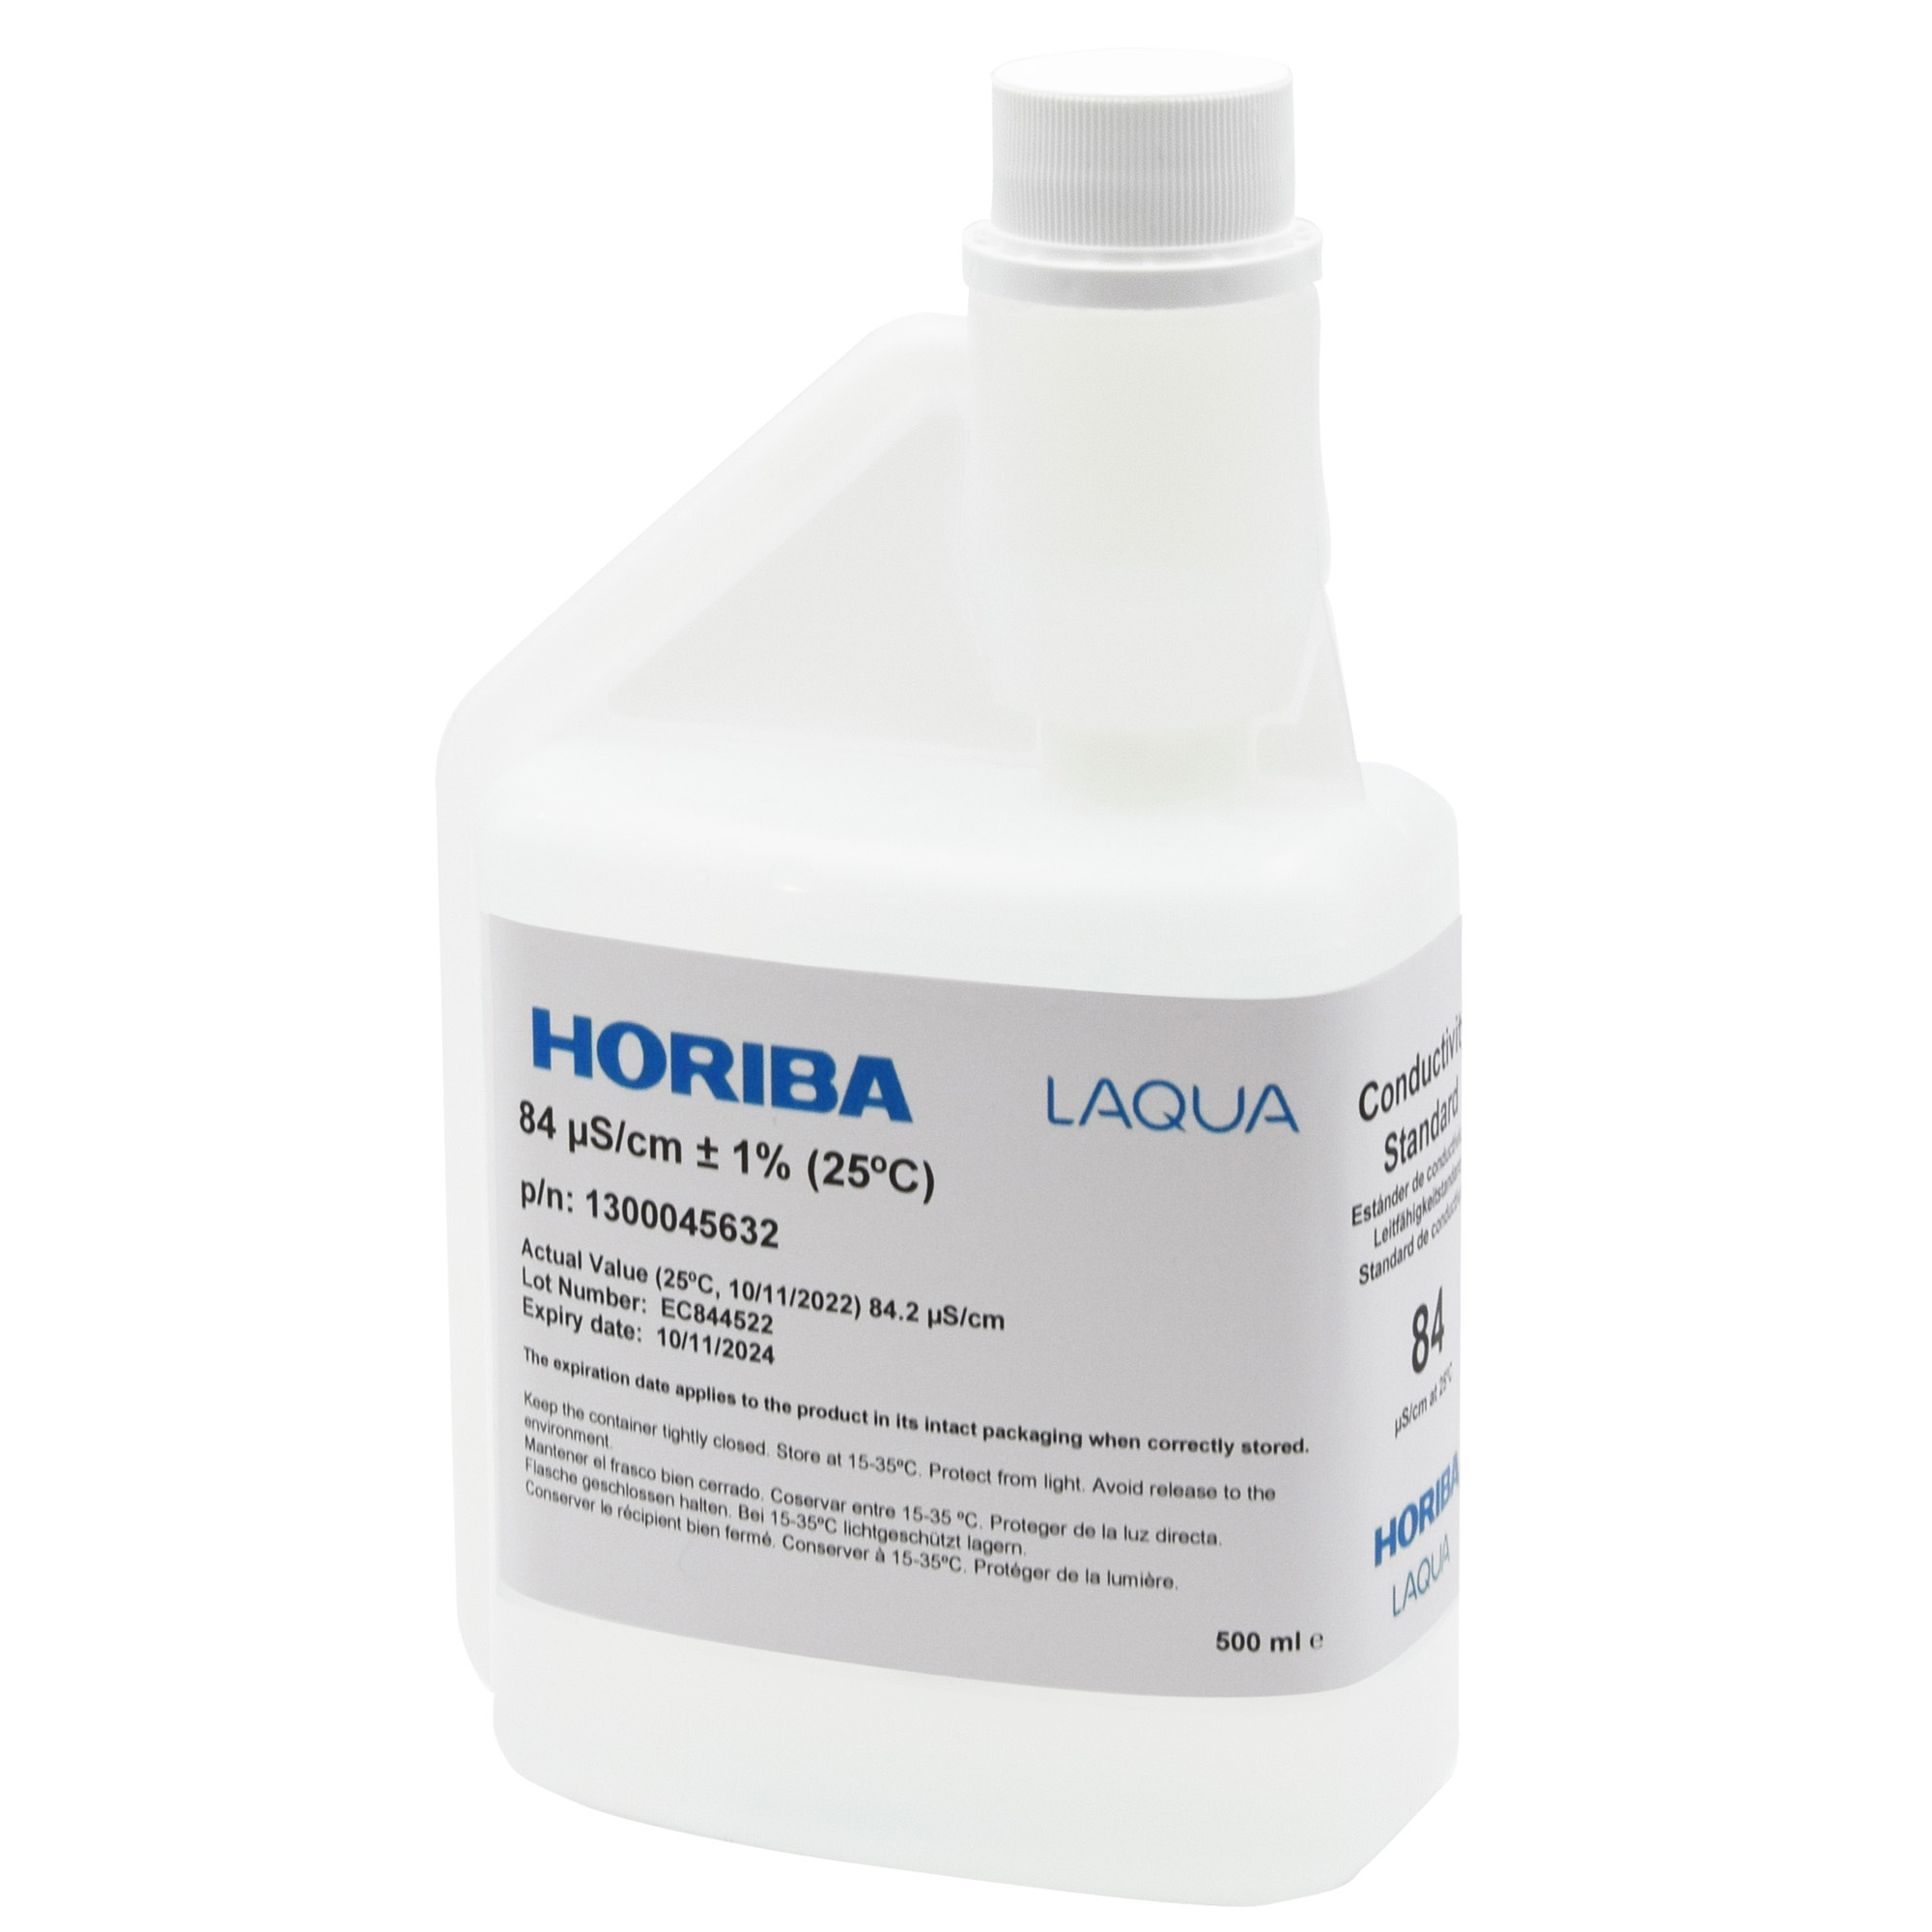 HORIBA 84 μS/cm conductivity calibration solution 500ml (500-EC-84)